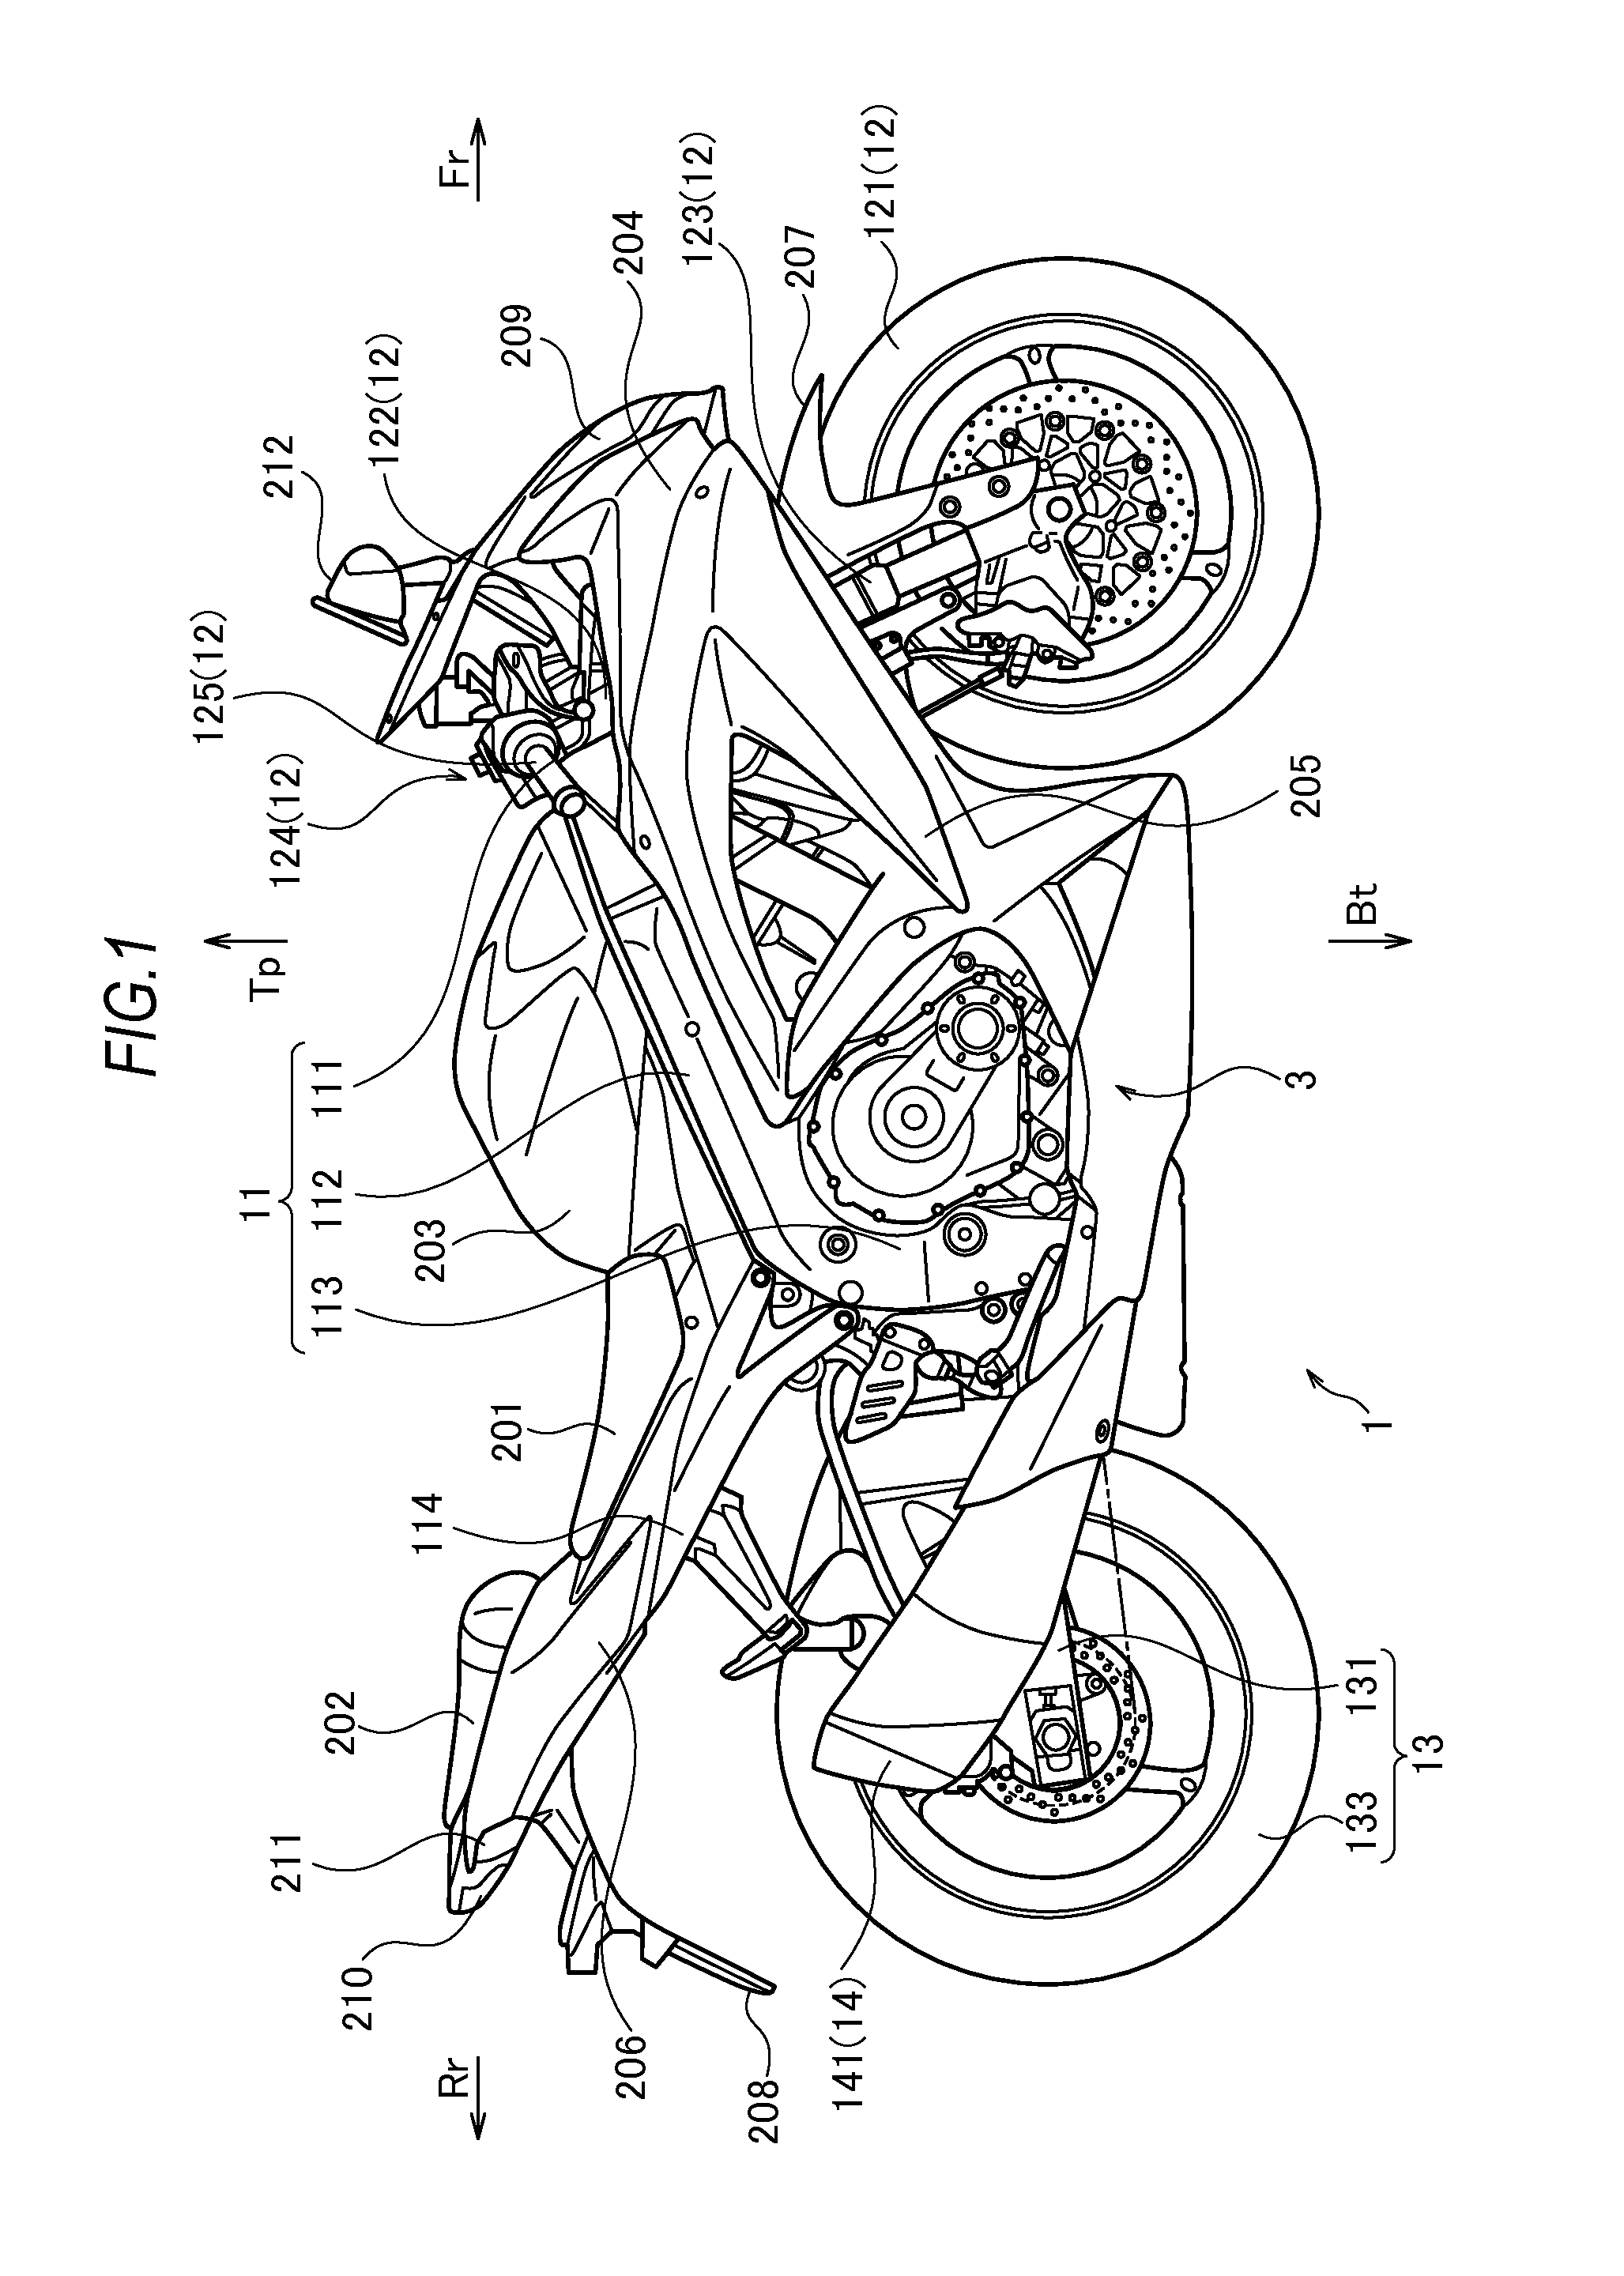 Engine unit of motorcycle